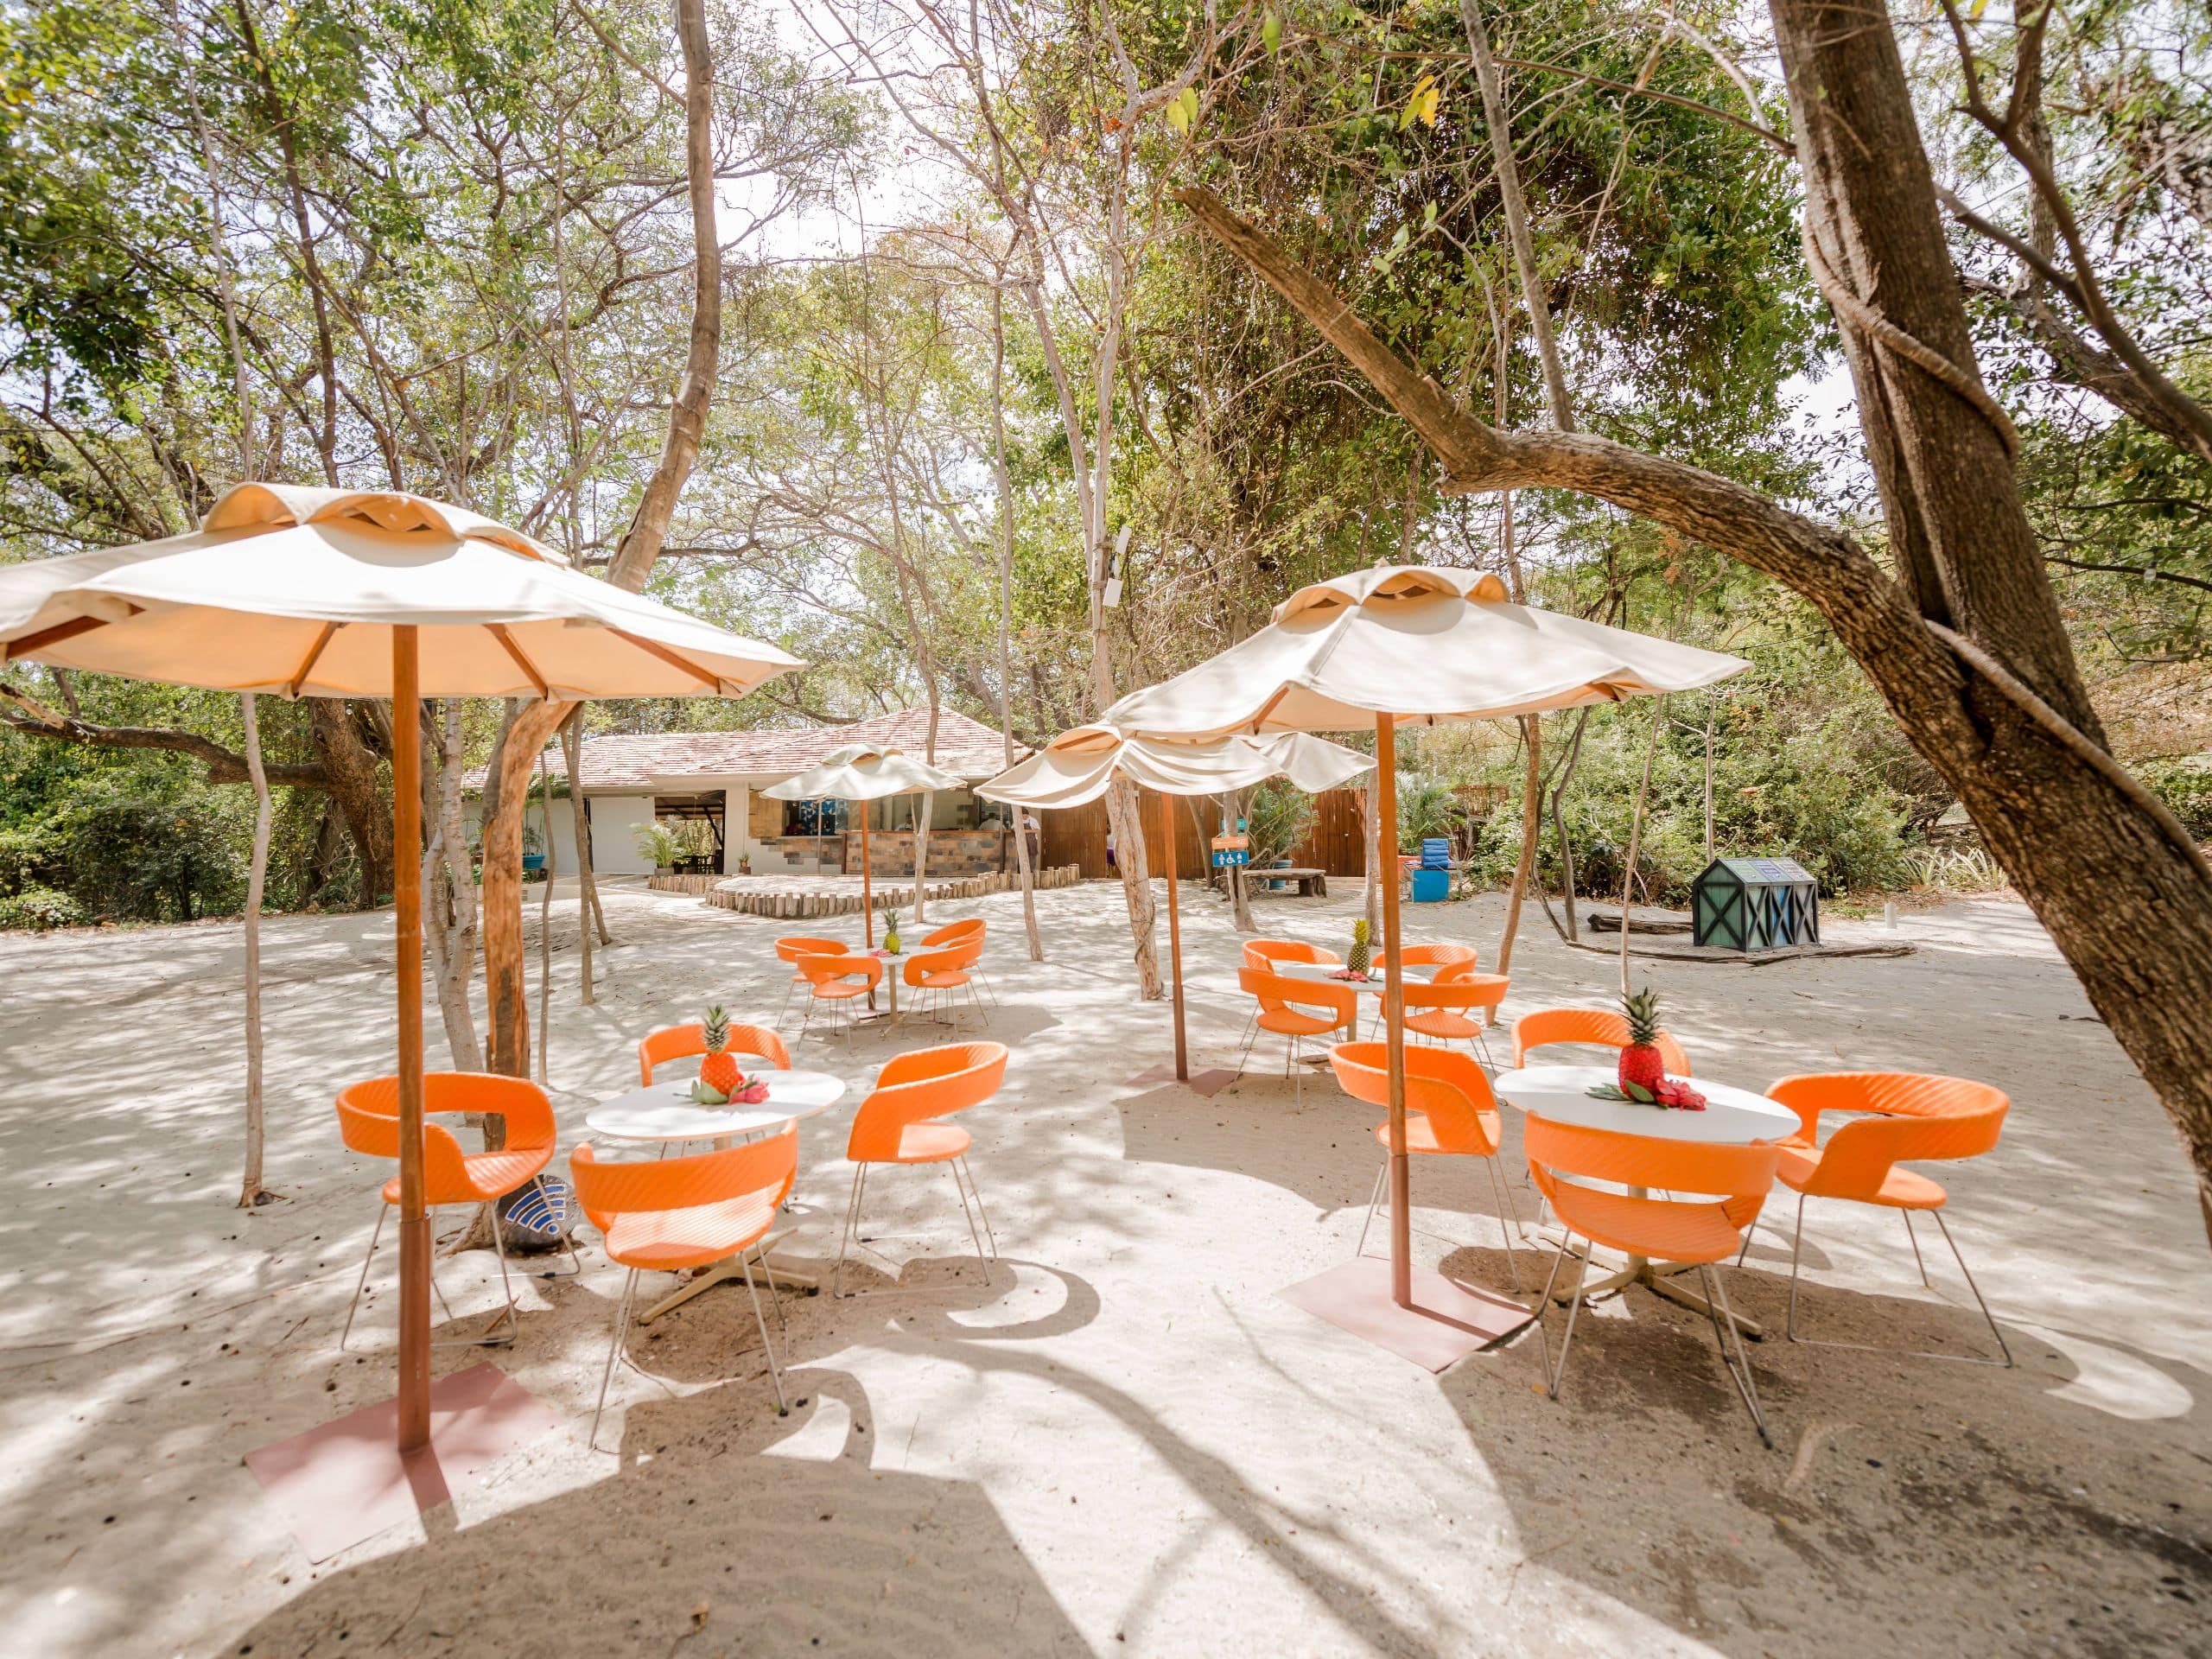 Andaz Costa Rica Resort at Peninsula Papagayo Beach Party Orange Tables